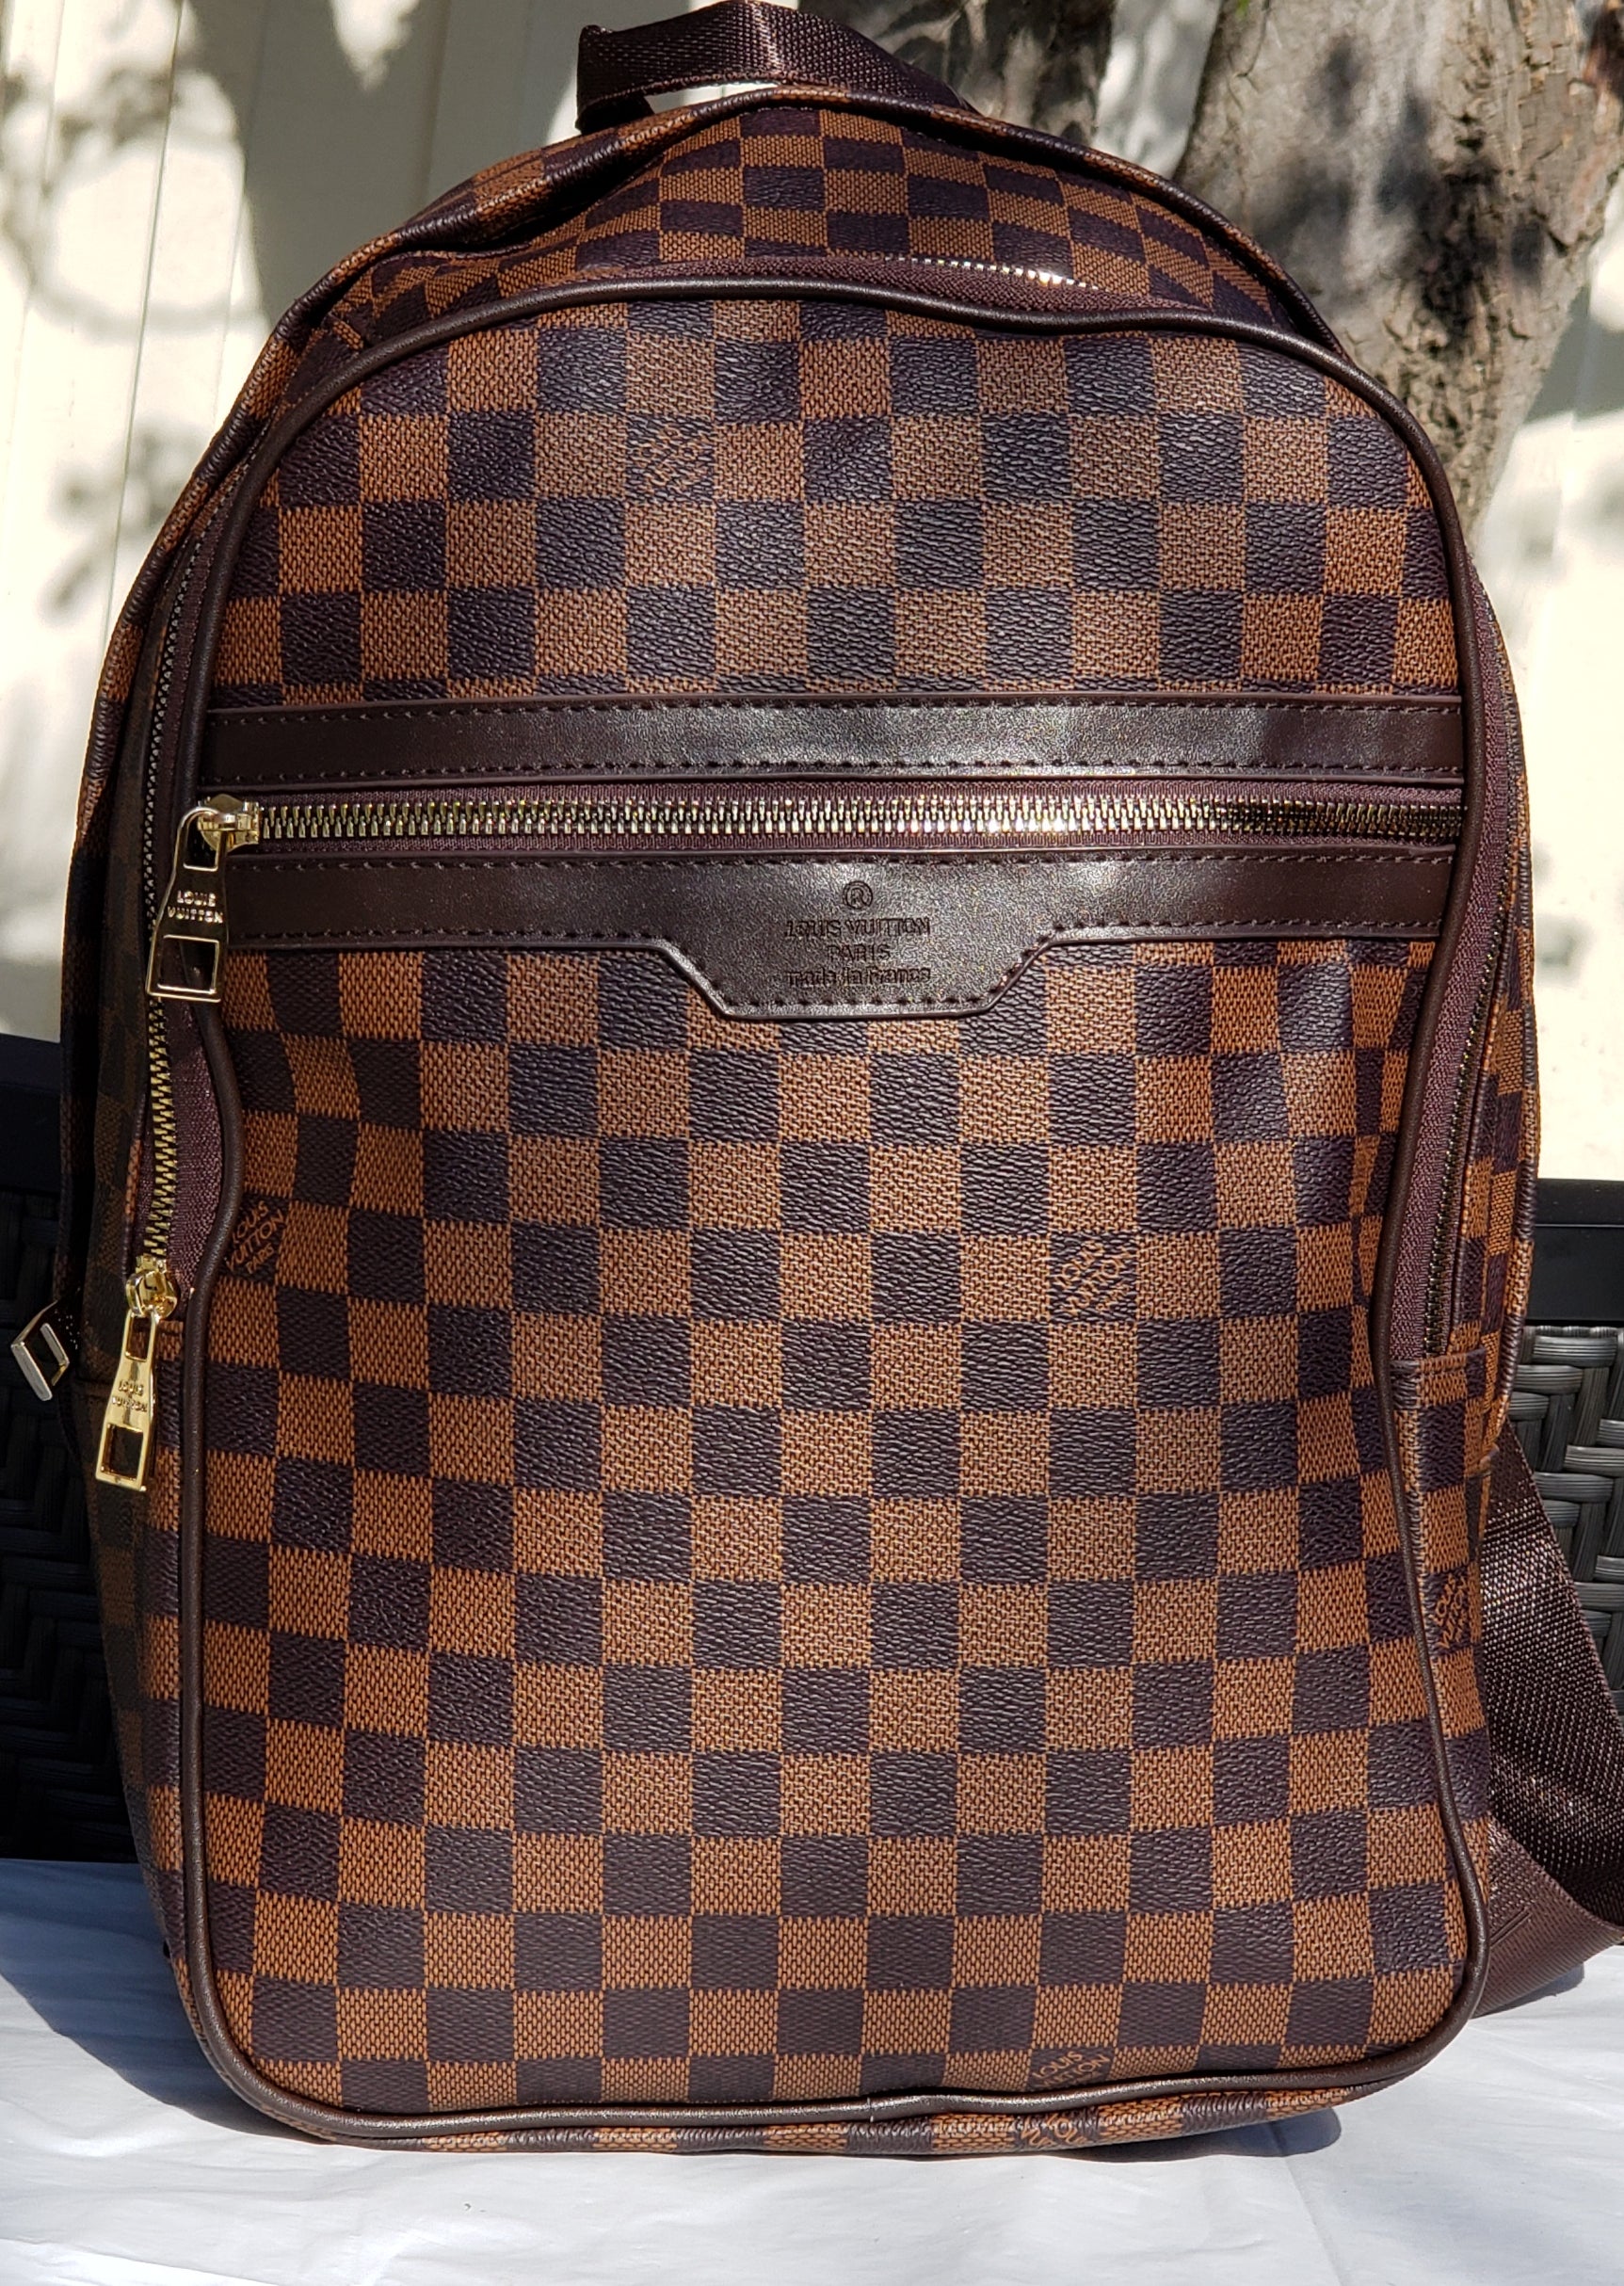 checkerboard lv bag